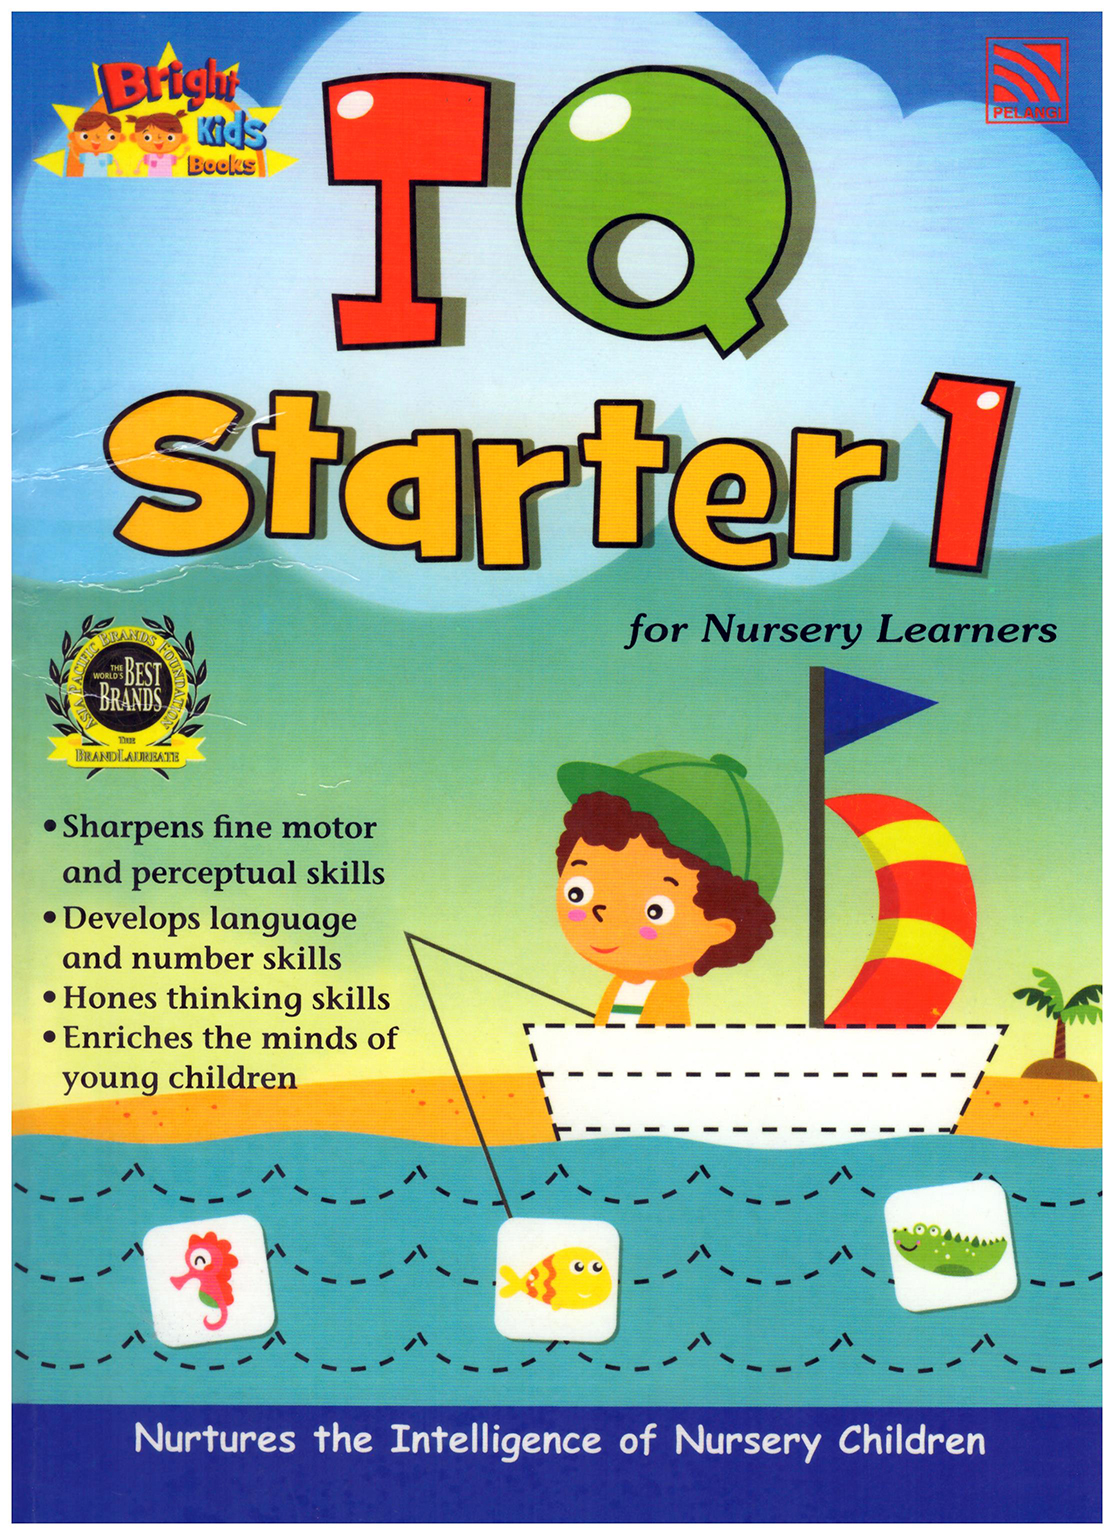 Bright Kids Books IQ Starter 1 for Nursery Learners